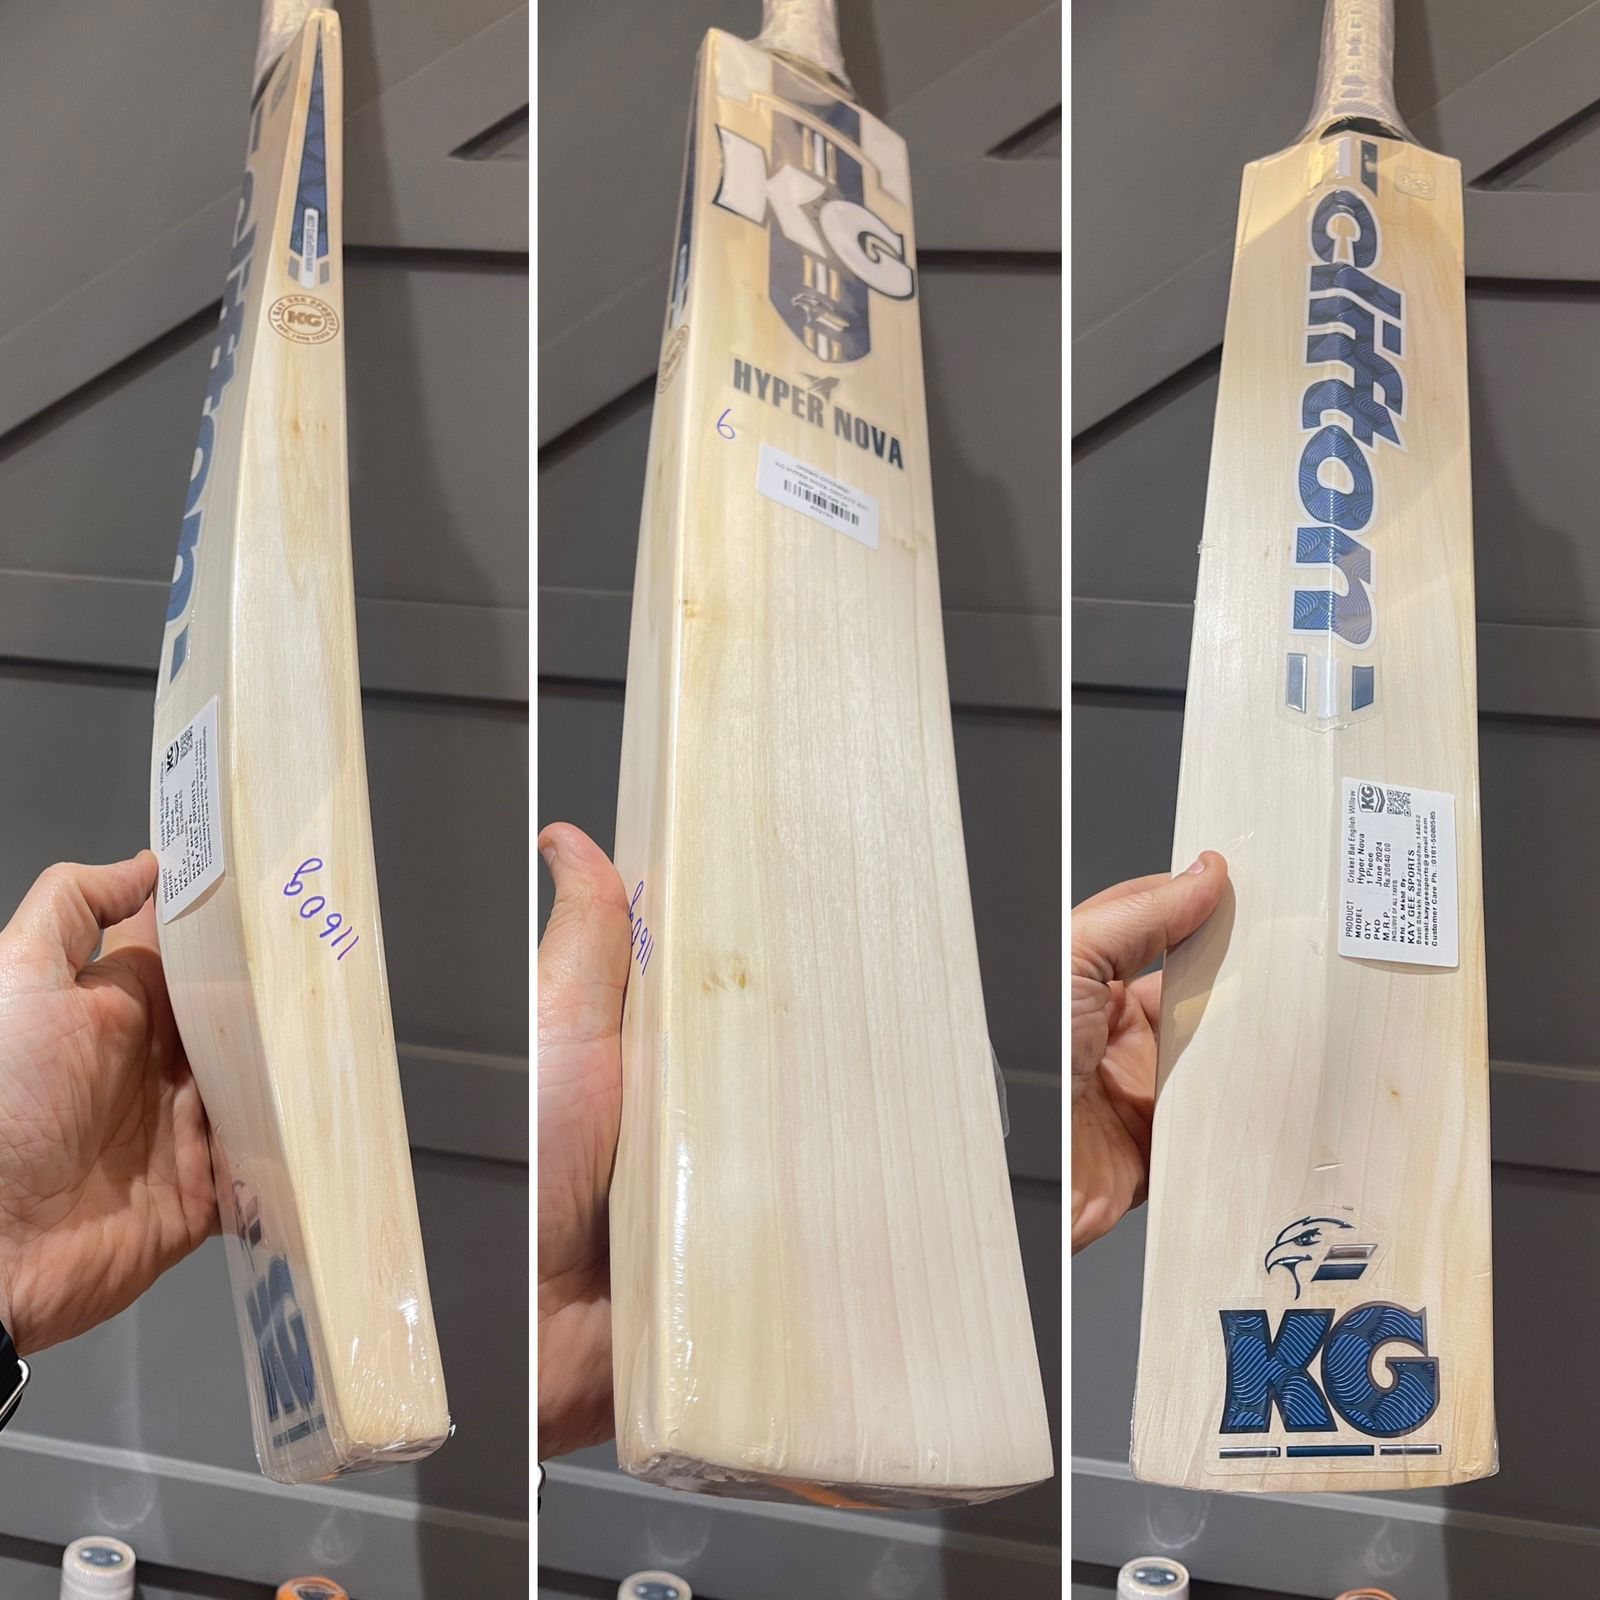 KG Hyper Nova Cricket Bat